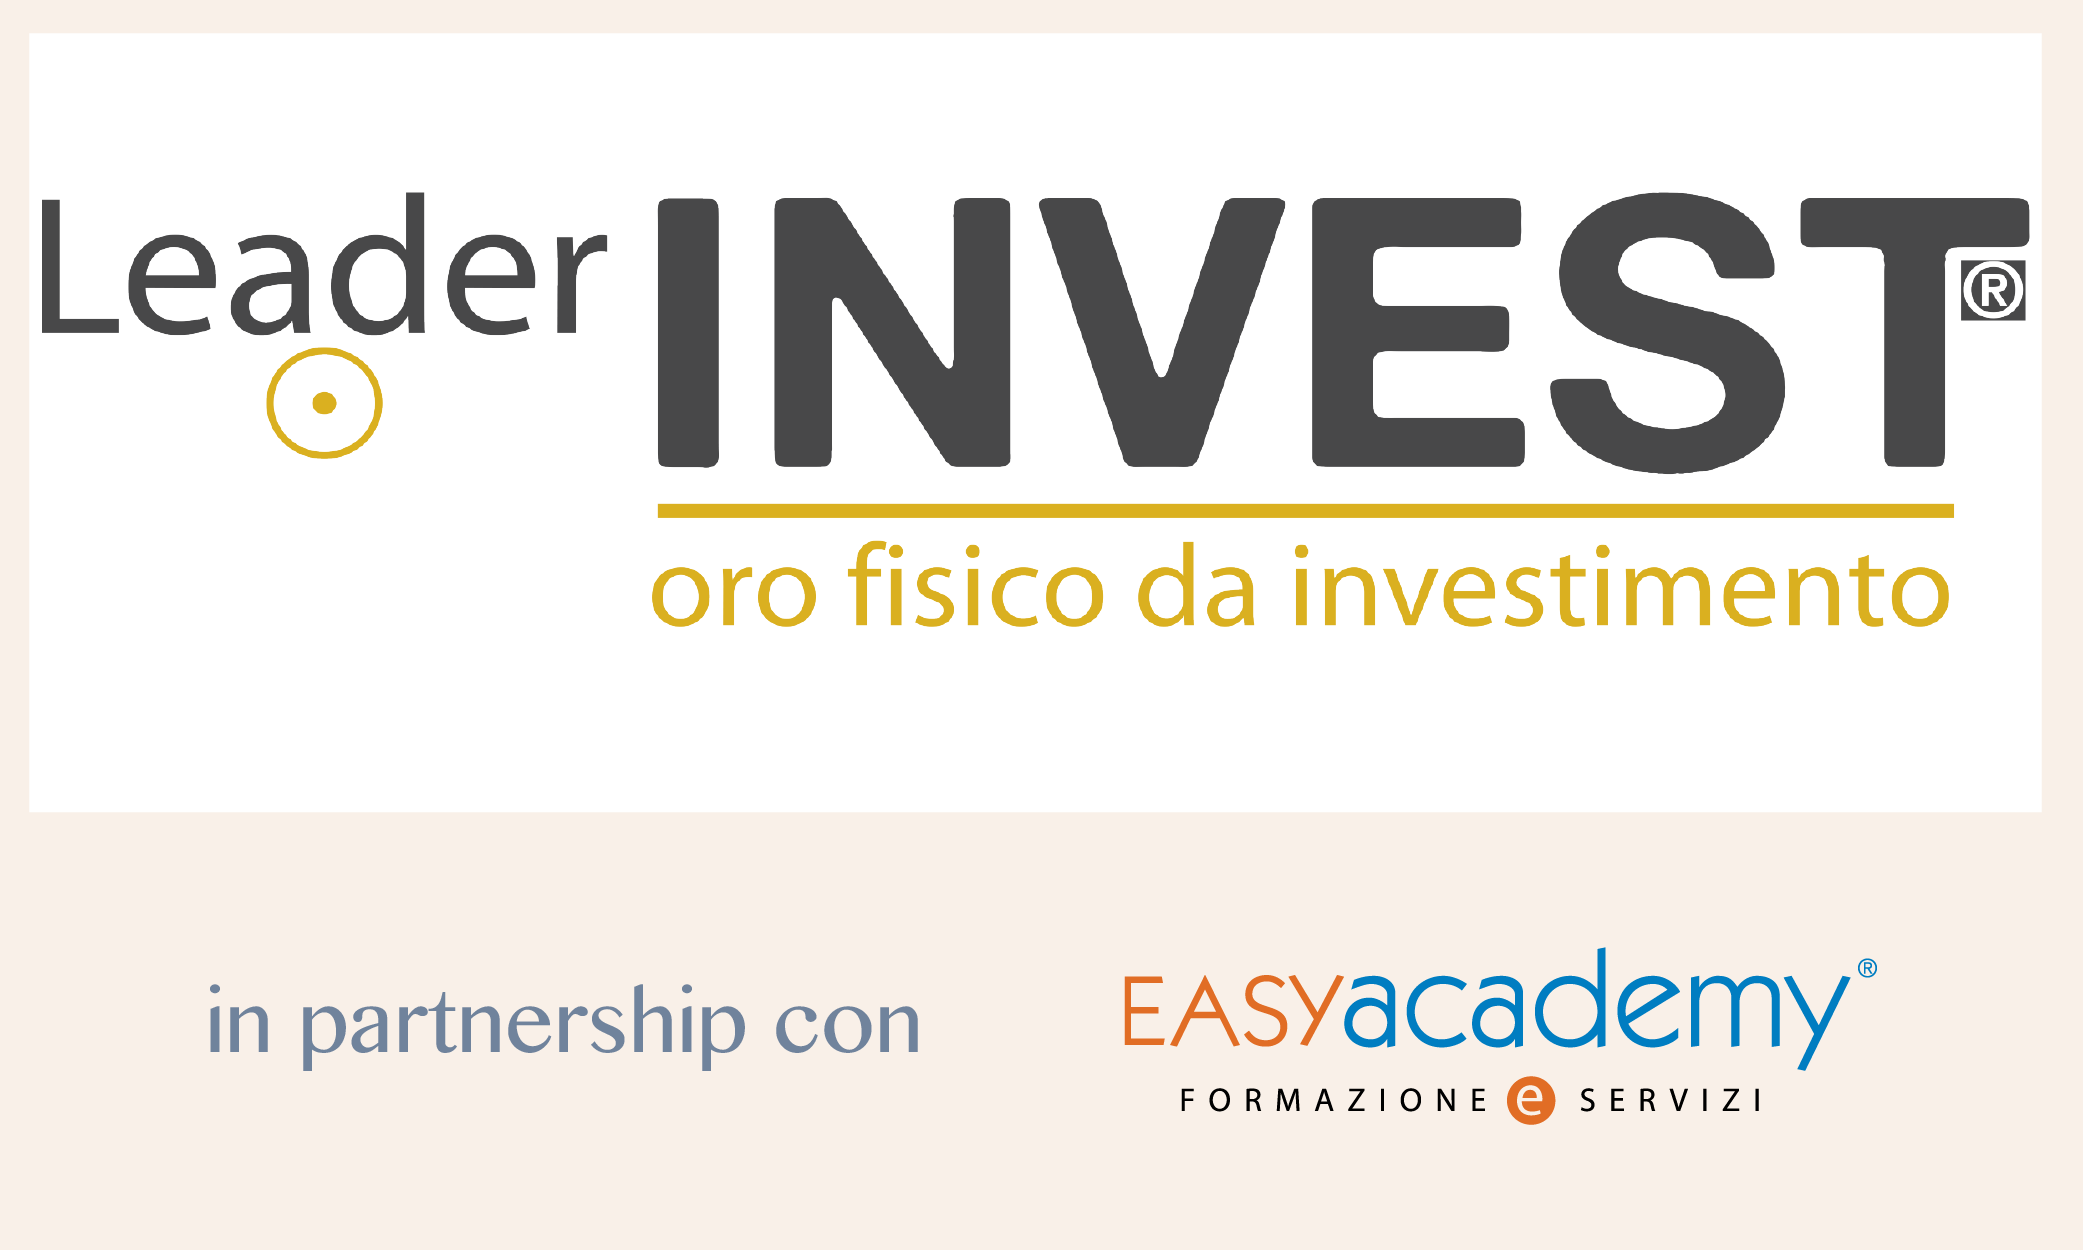 Leadr Invest - Easyacademy